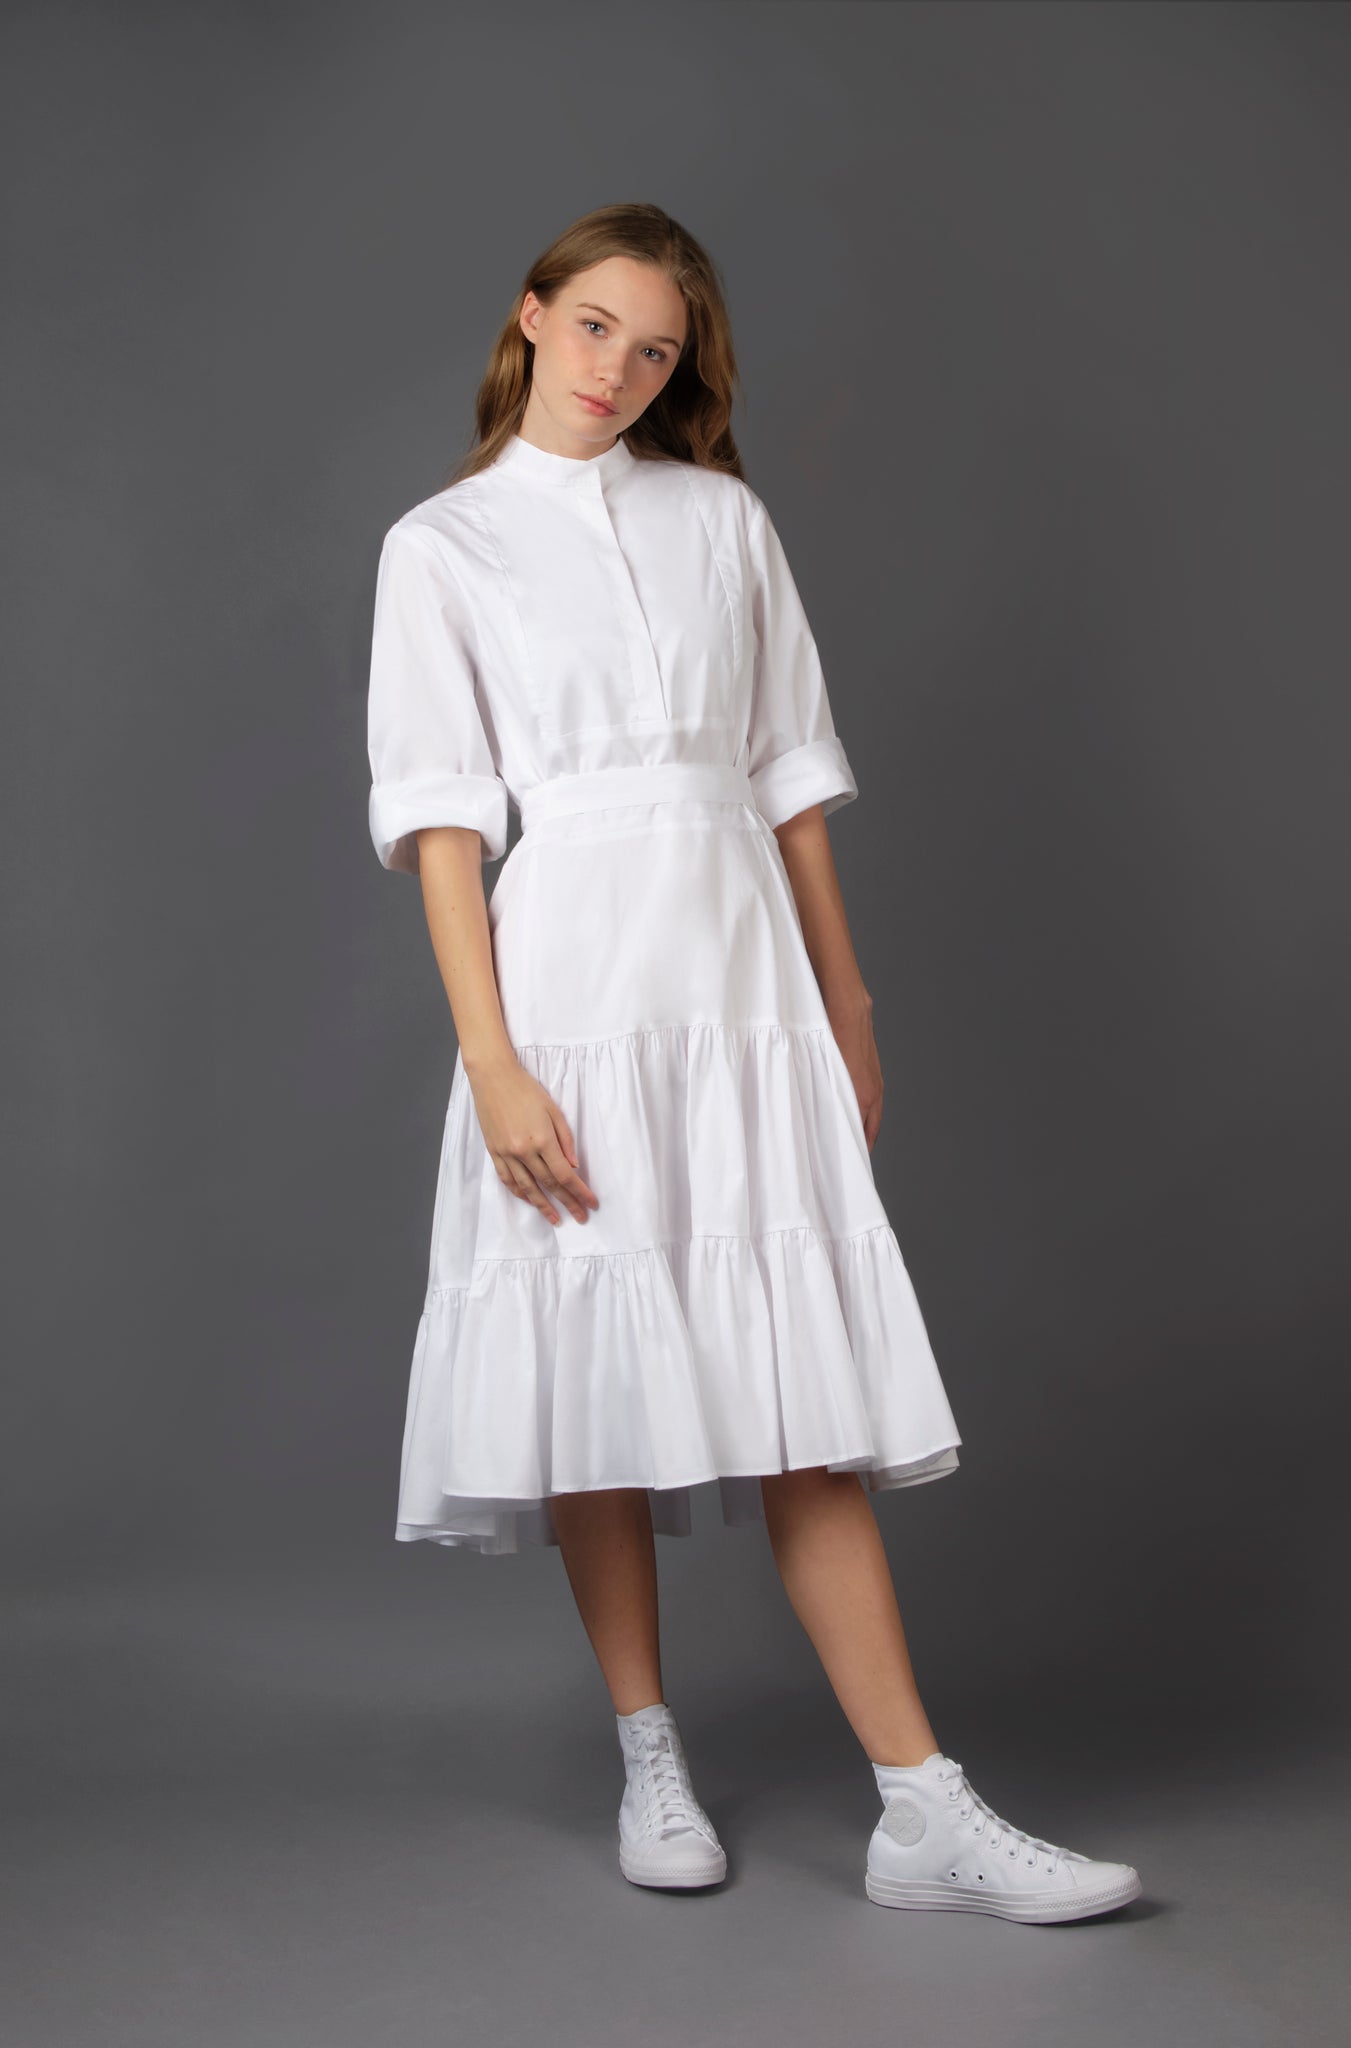 White Ruffle Dress #1522 FINAL SALE